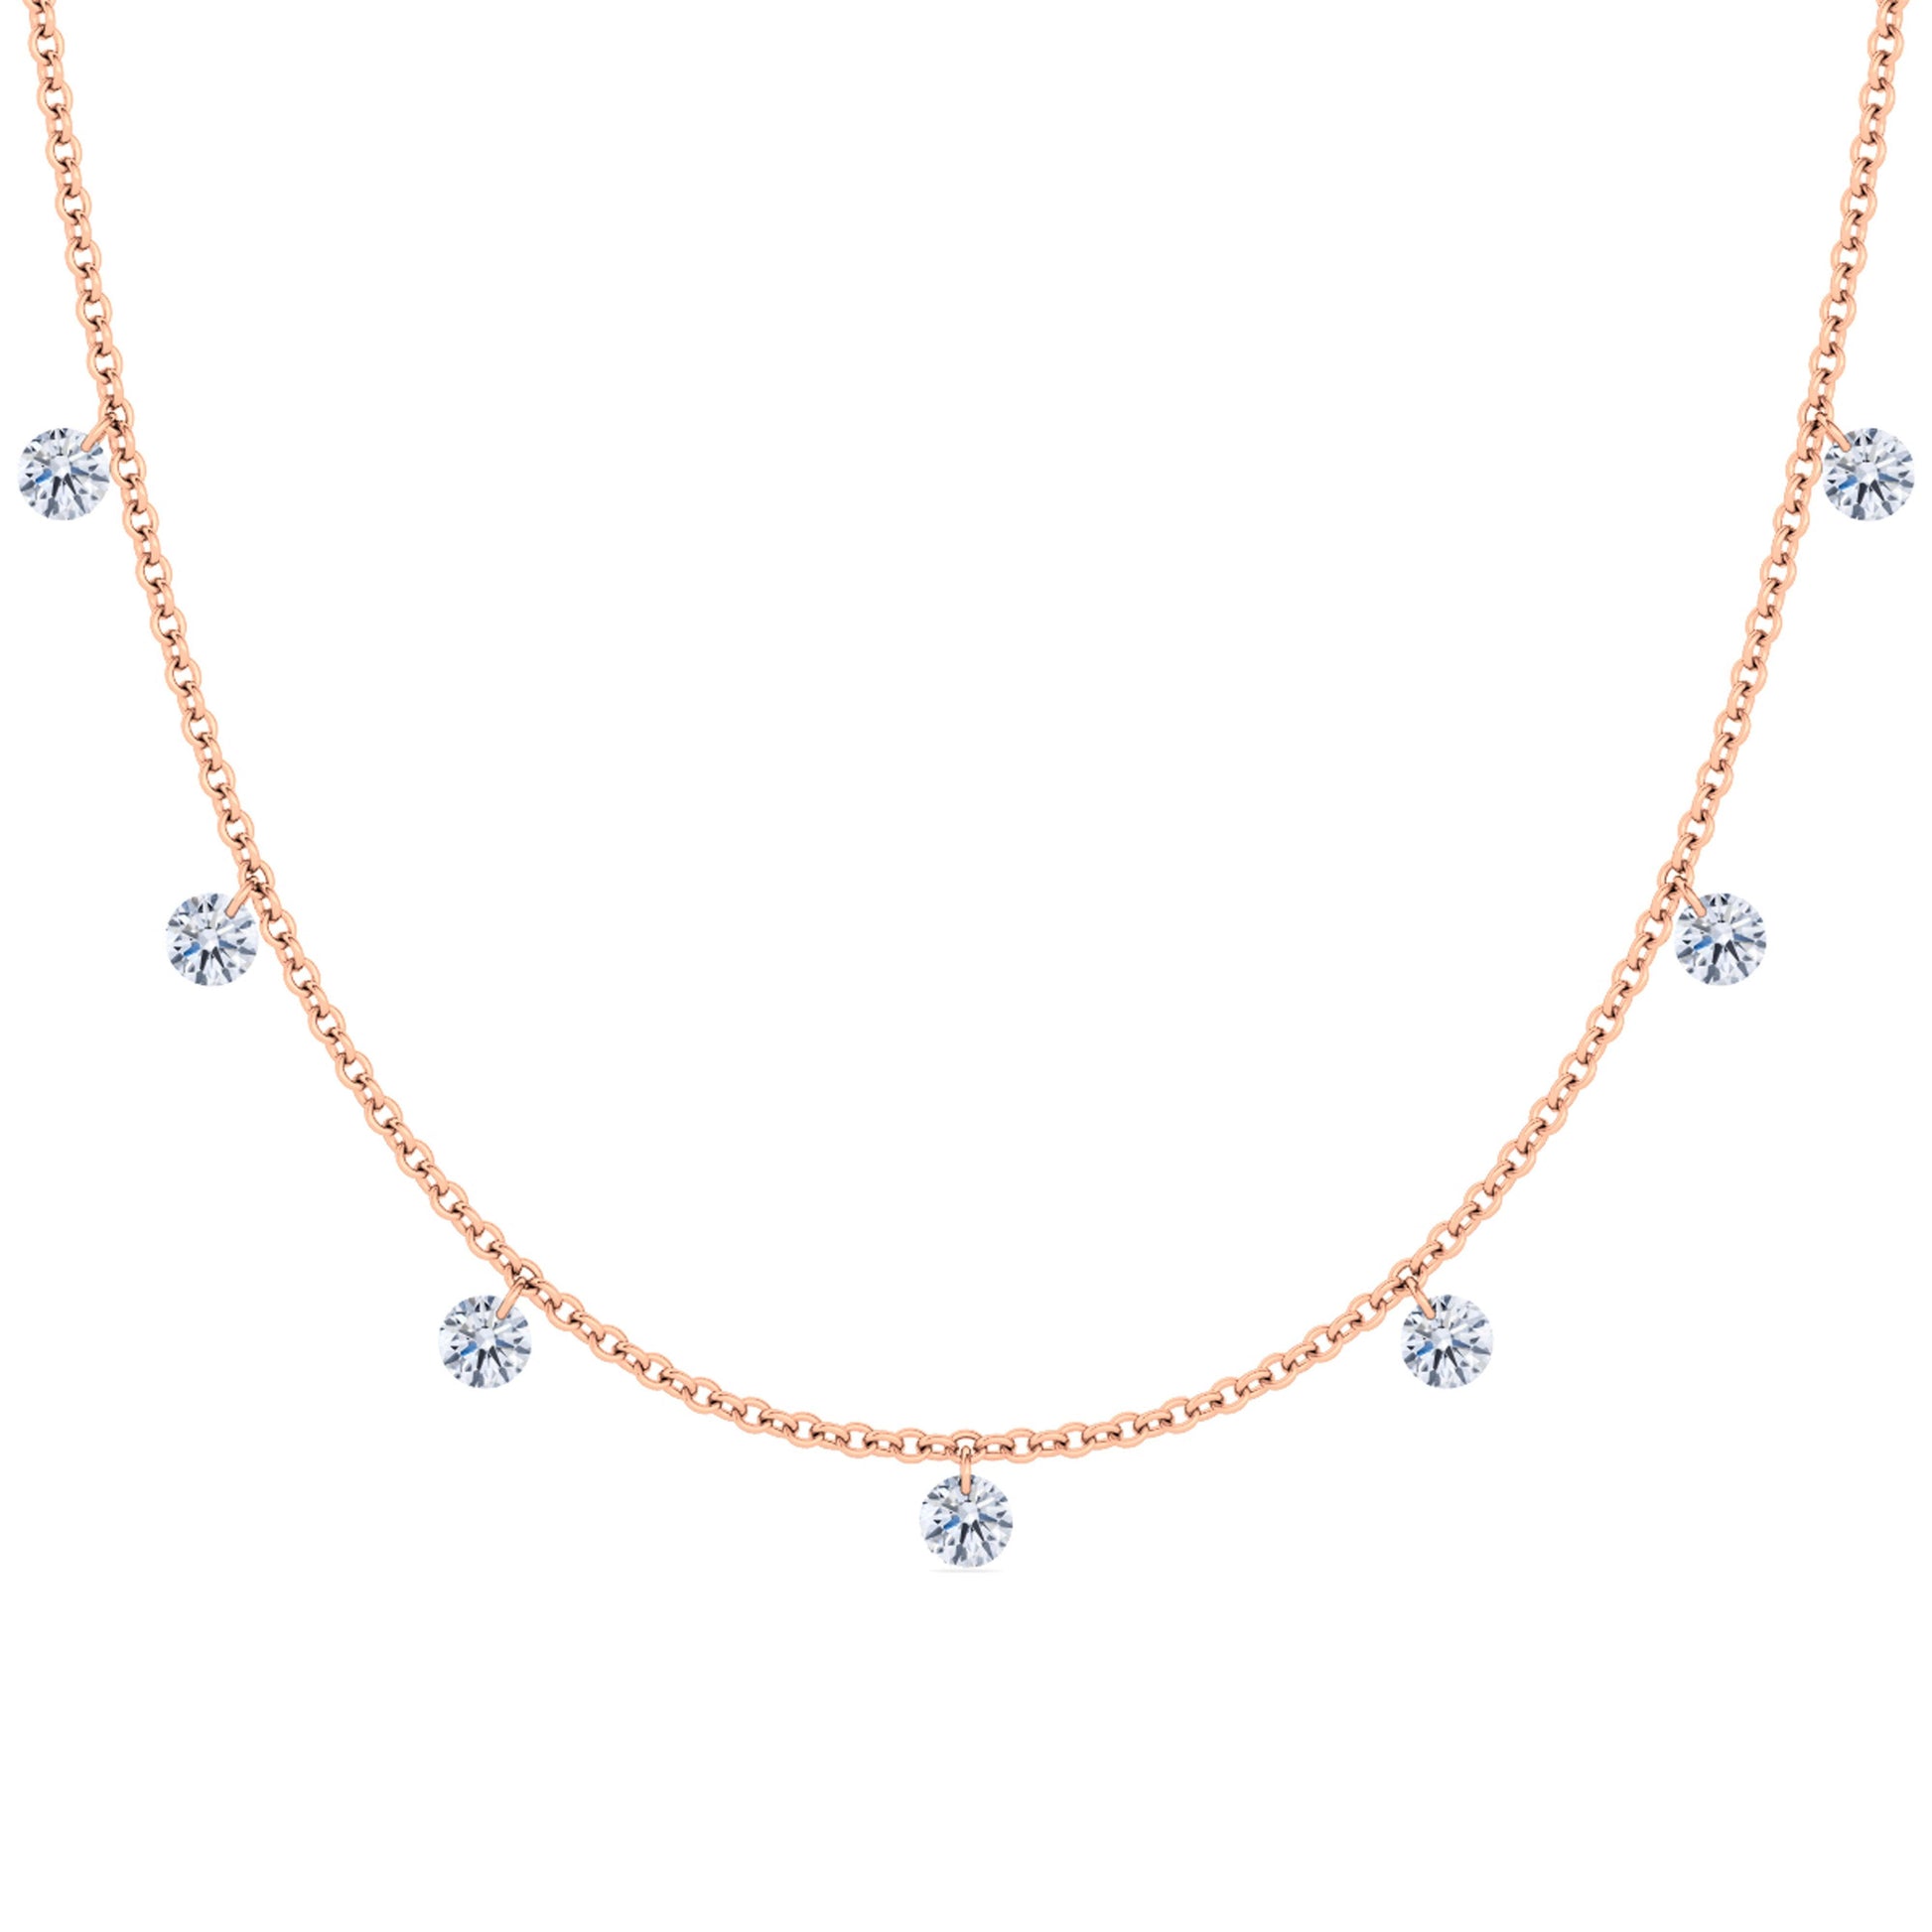 Floating Diamond Necklace - HauteCarat